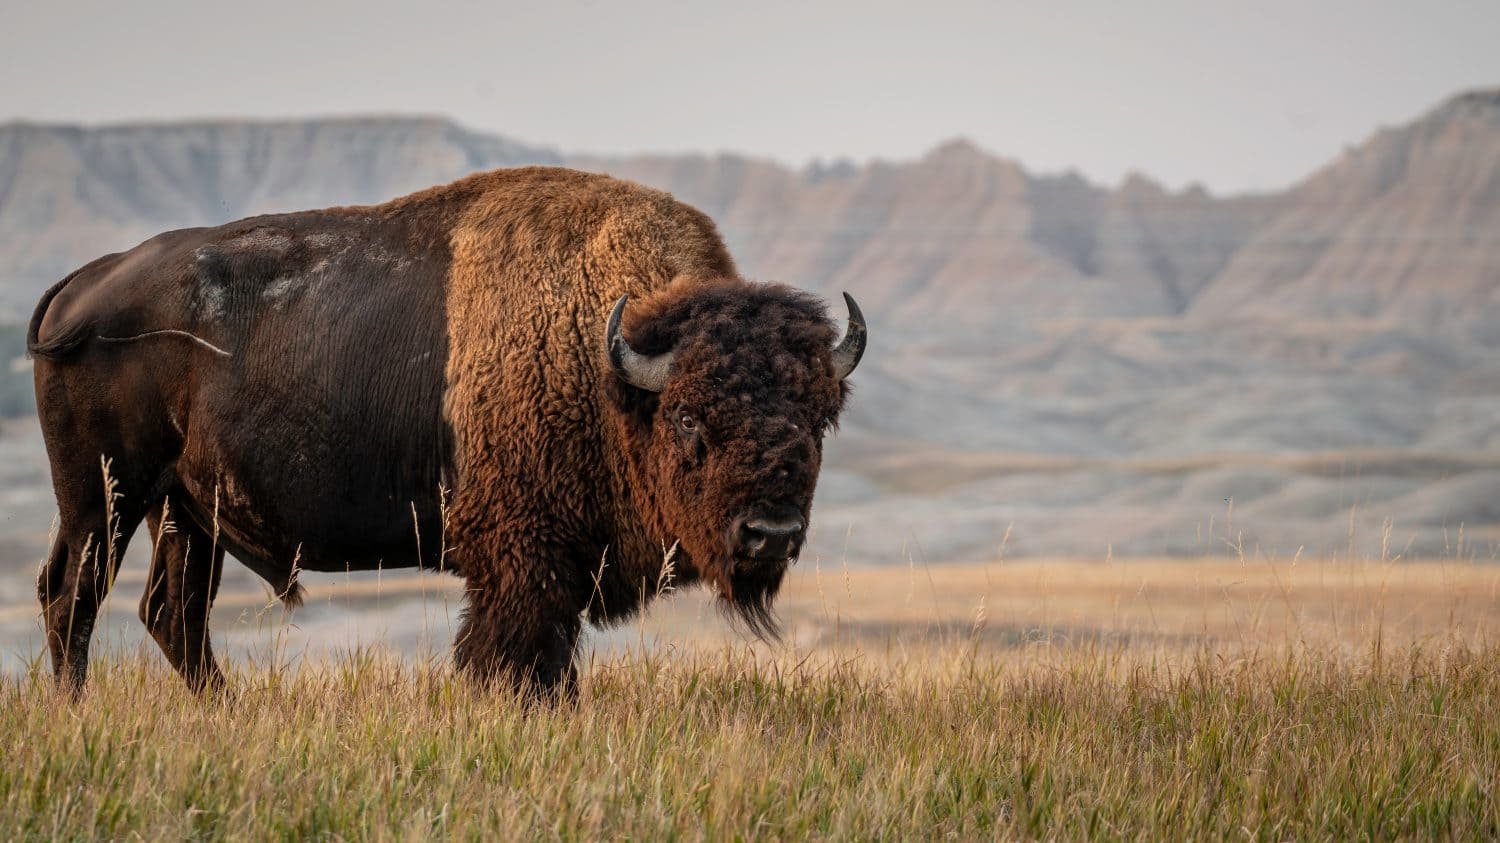 American Bison in South Dakota